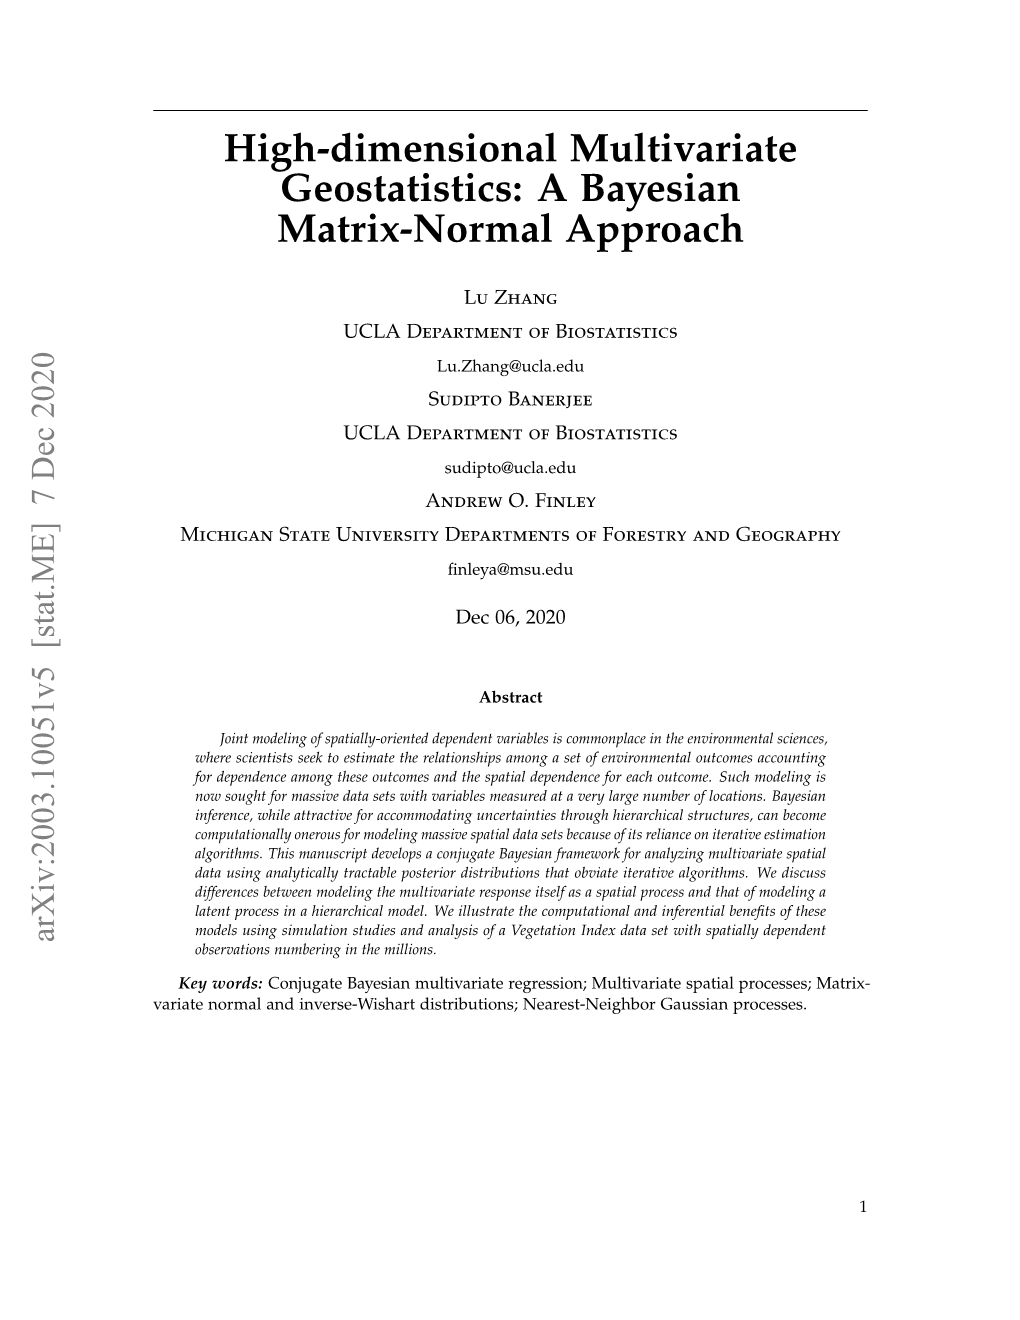 High-Dimensional Multivariate Geostatistics: a Bayesian Matrix-Normal Approach